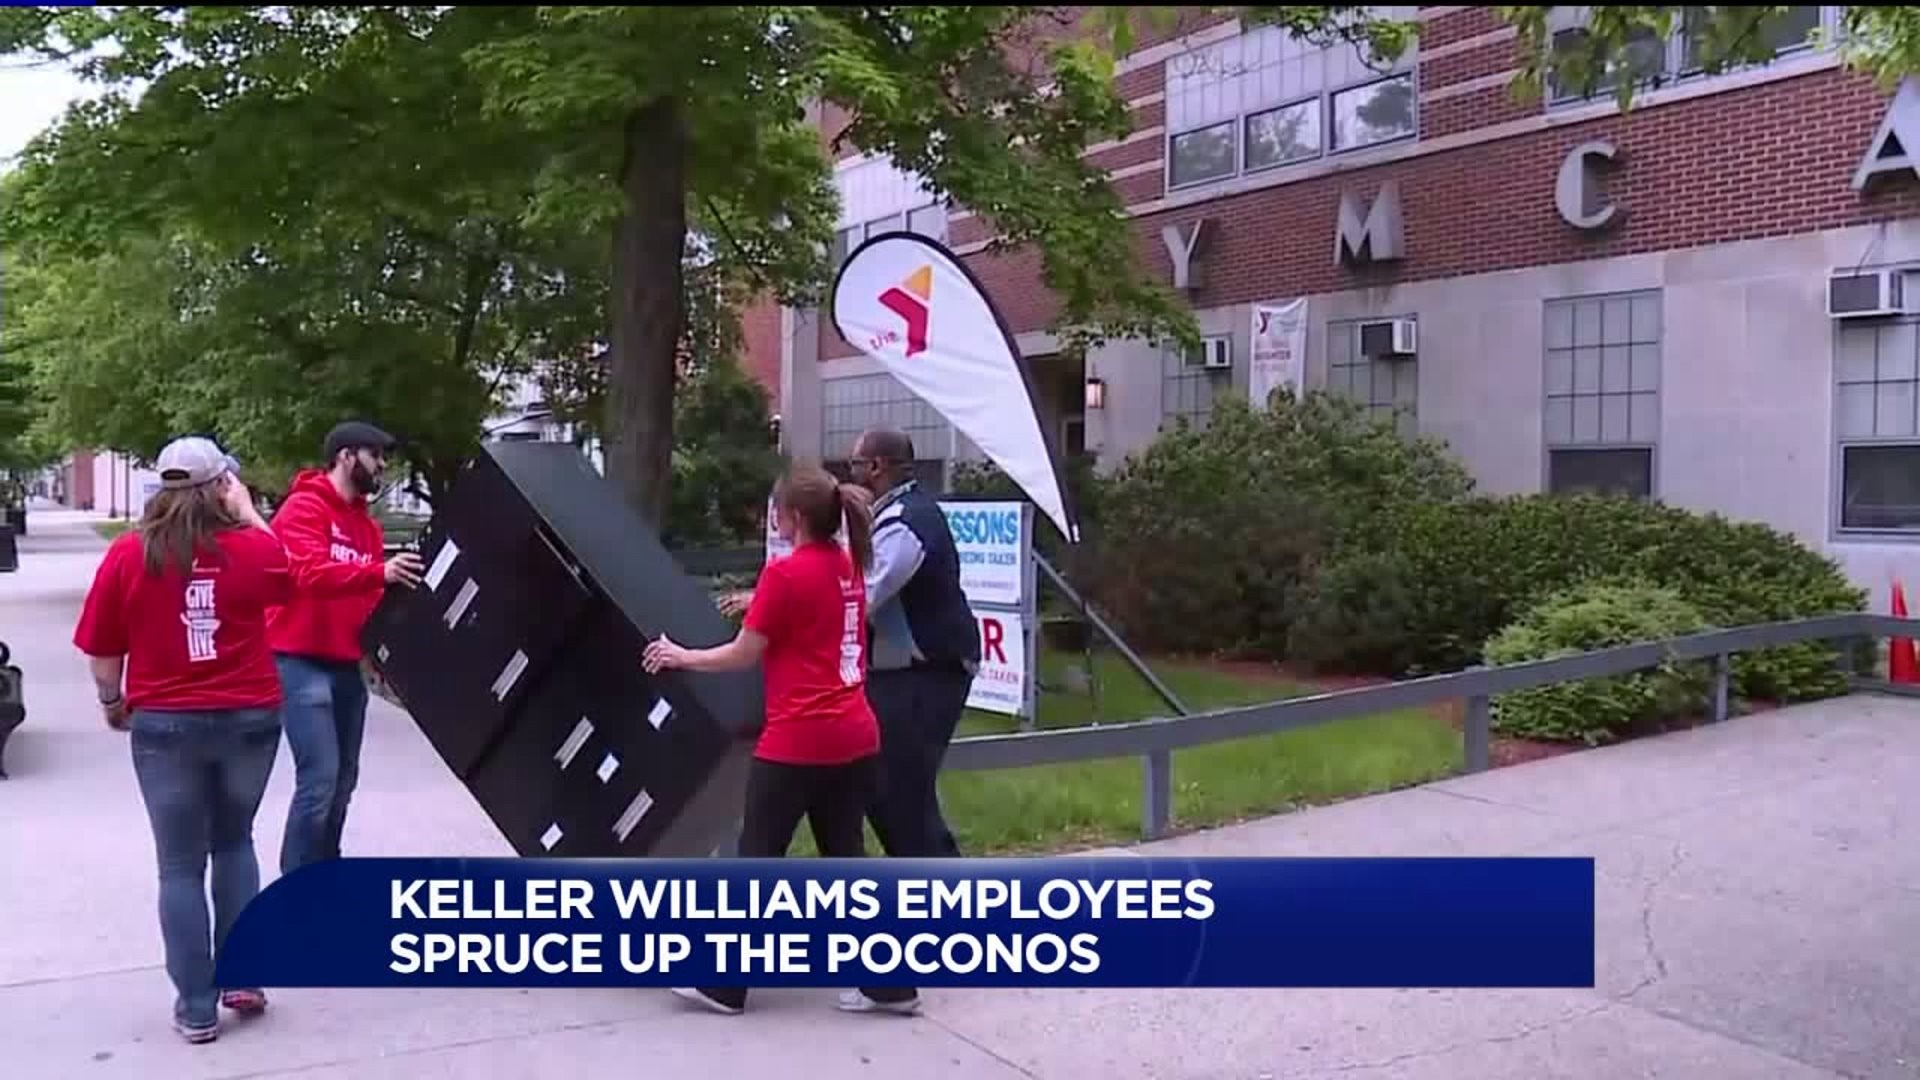 Keller Williams Employees Spruce Up the Poconos